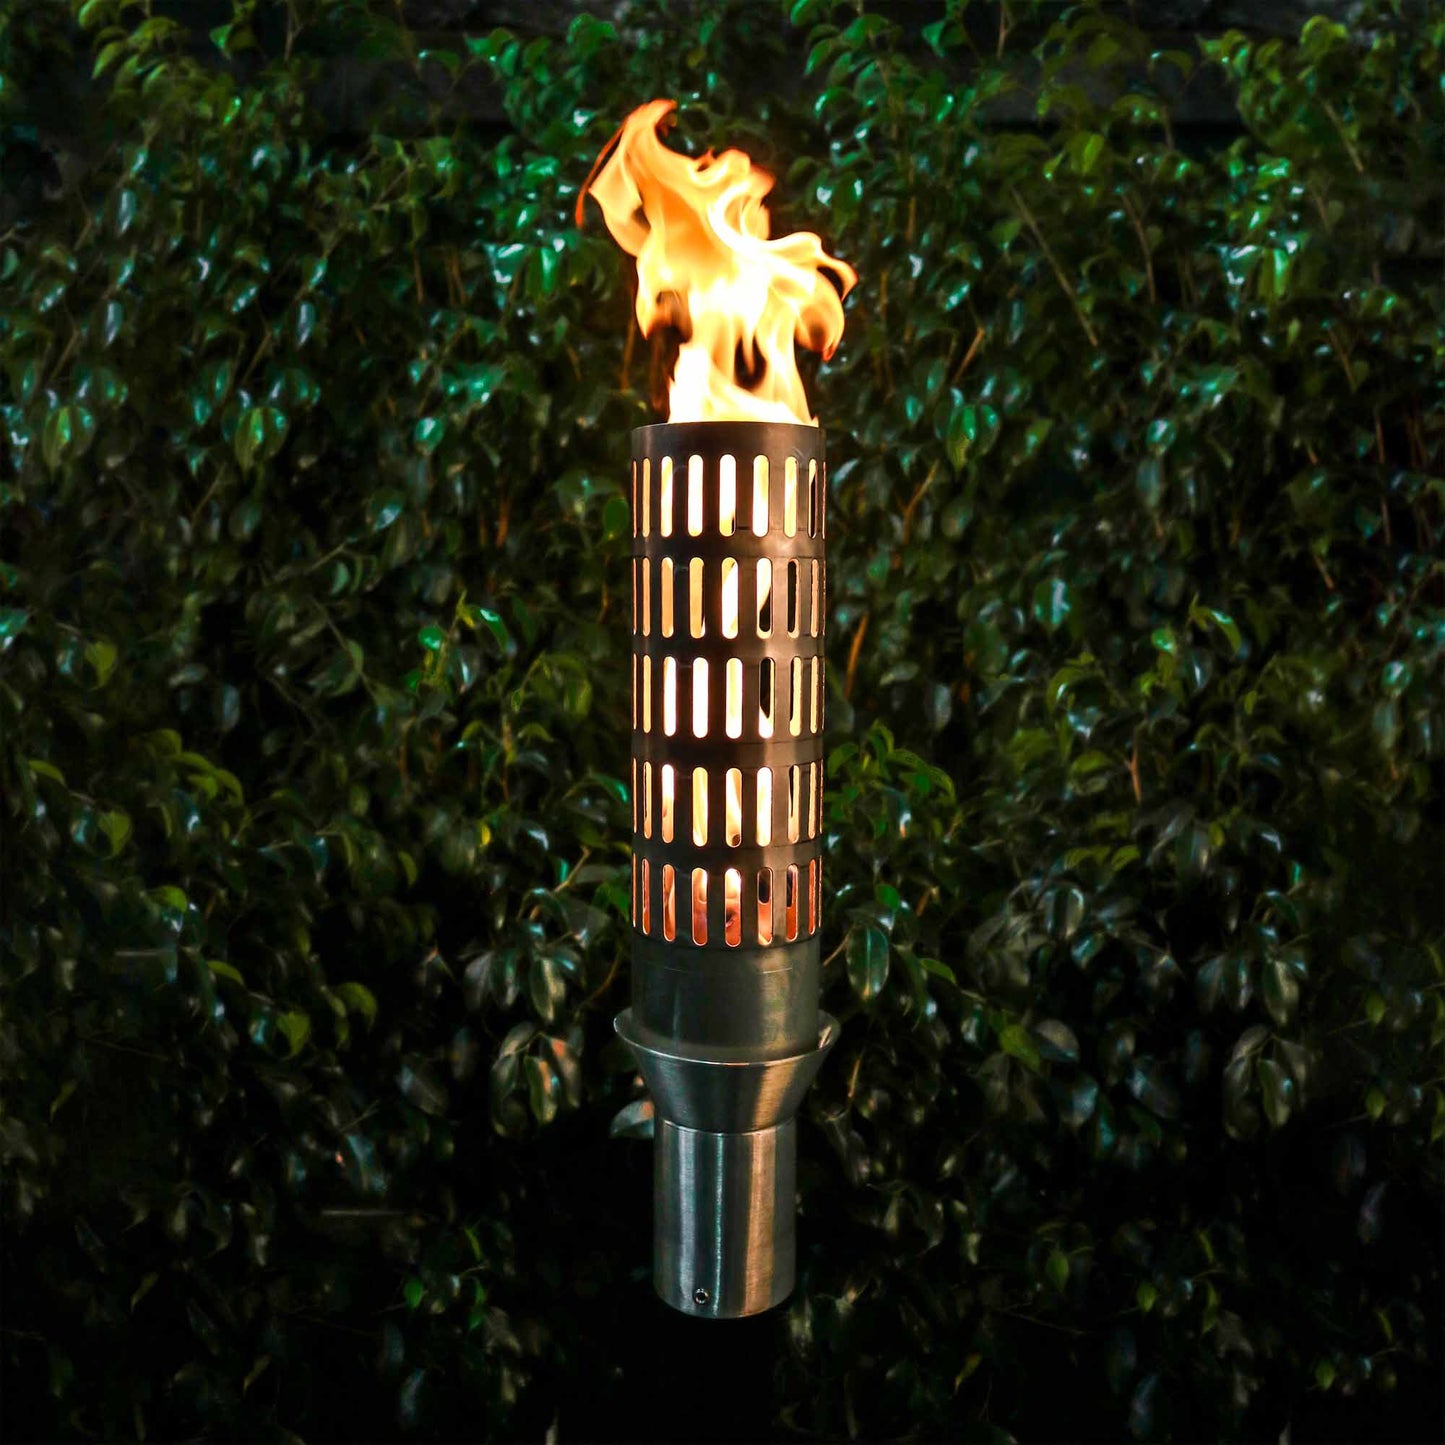 Vent Fire Torch - Original TOP Torch Base